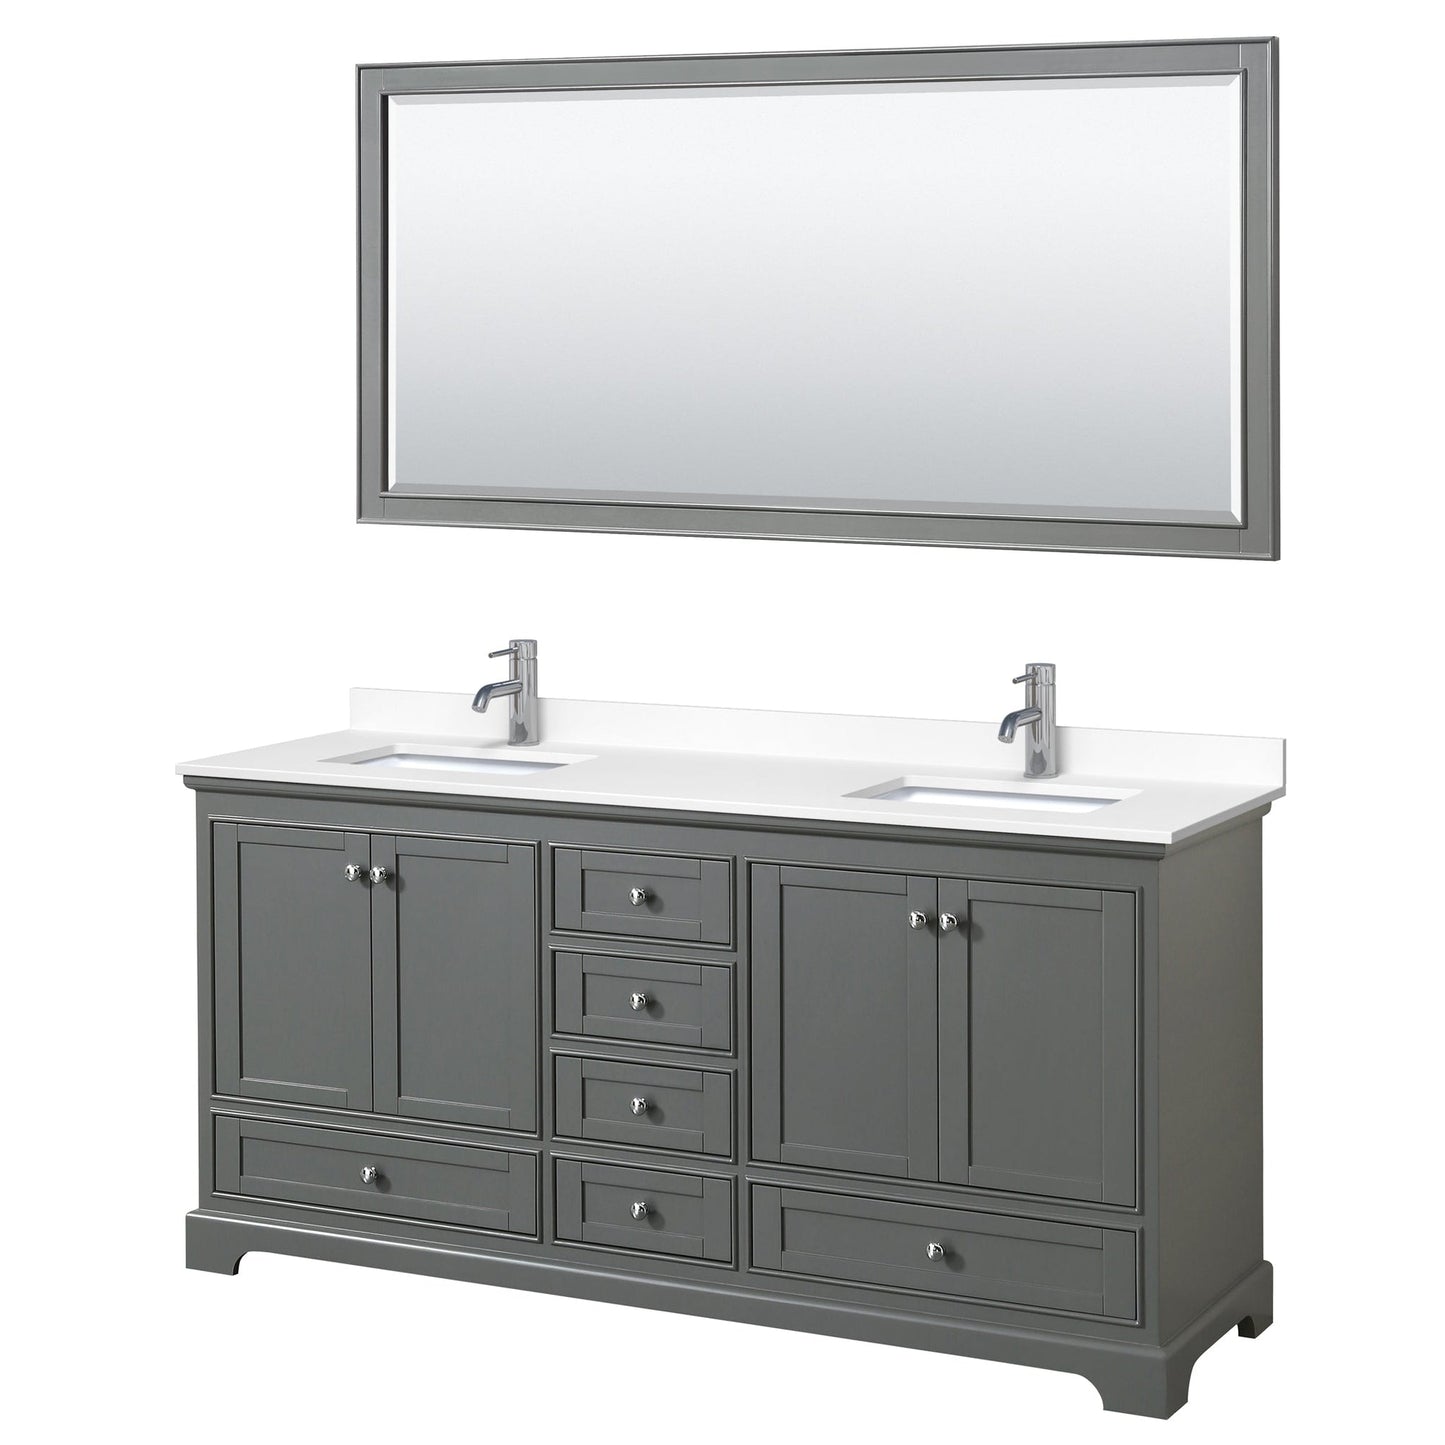 Wyndham Collection Deborah 72" Double Bathroom Vanity in Dark Gray, White Cultured Marble Countertop, Undermount Square Sinks, 70" Mirror